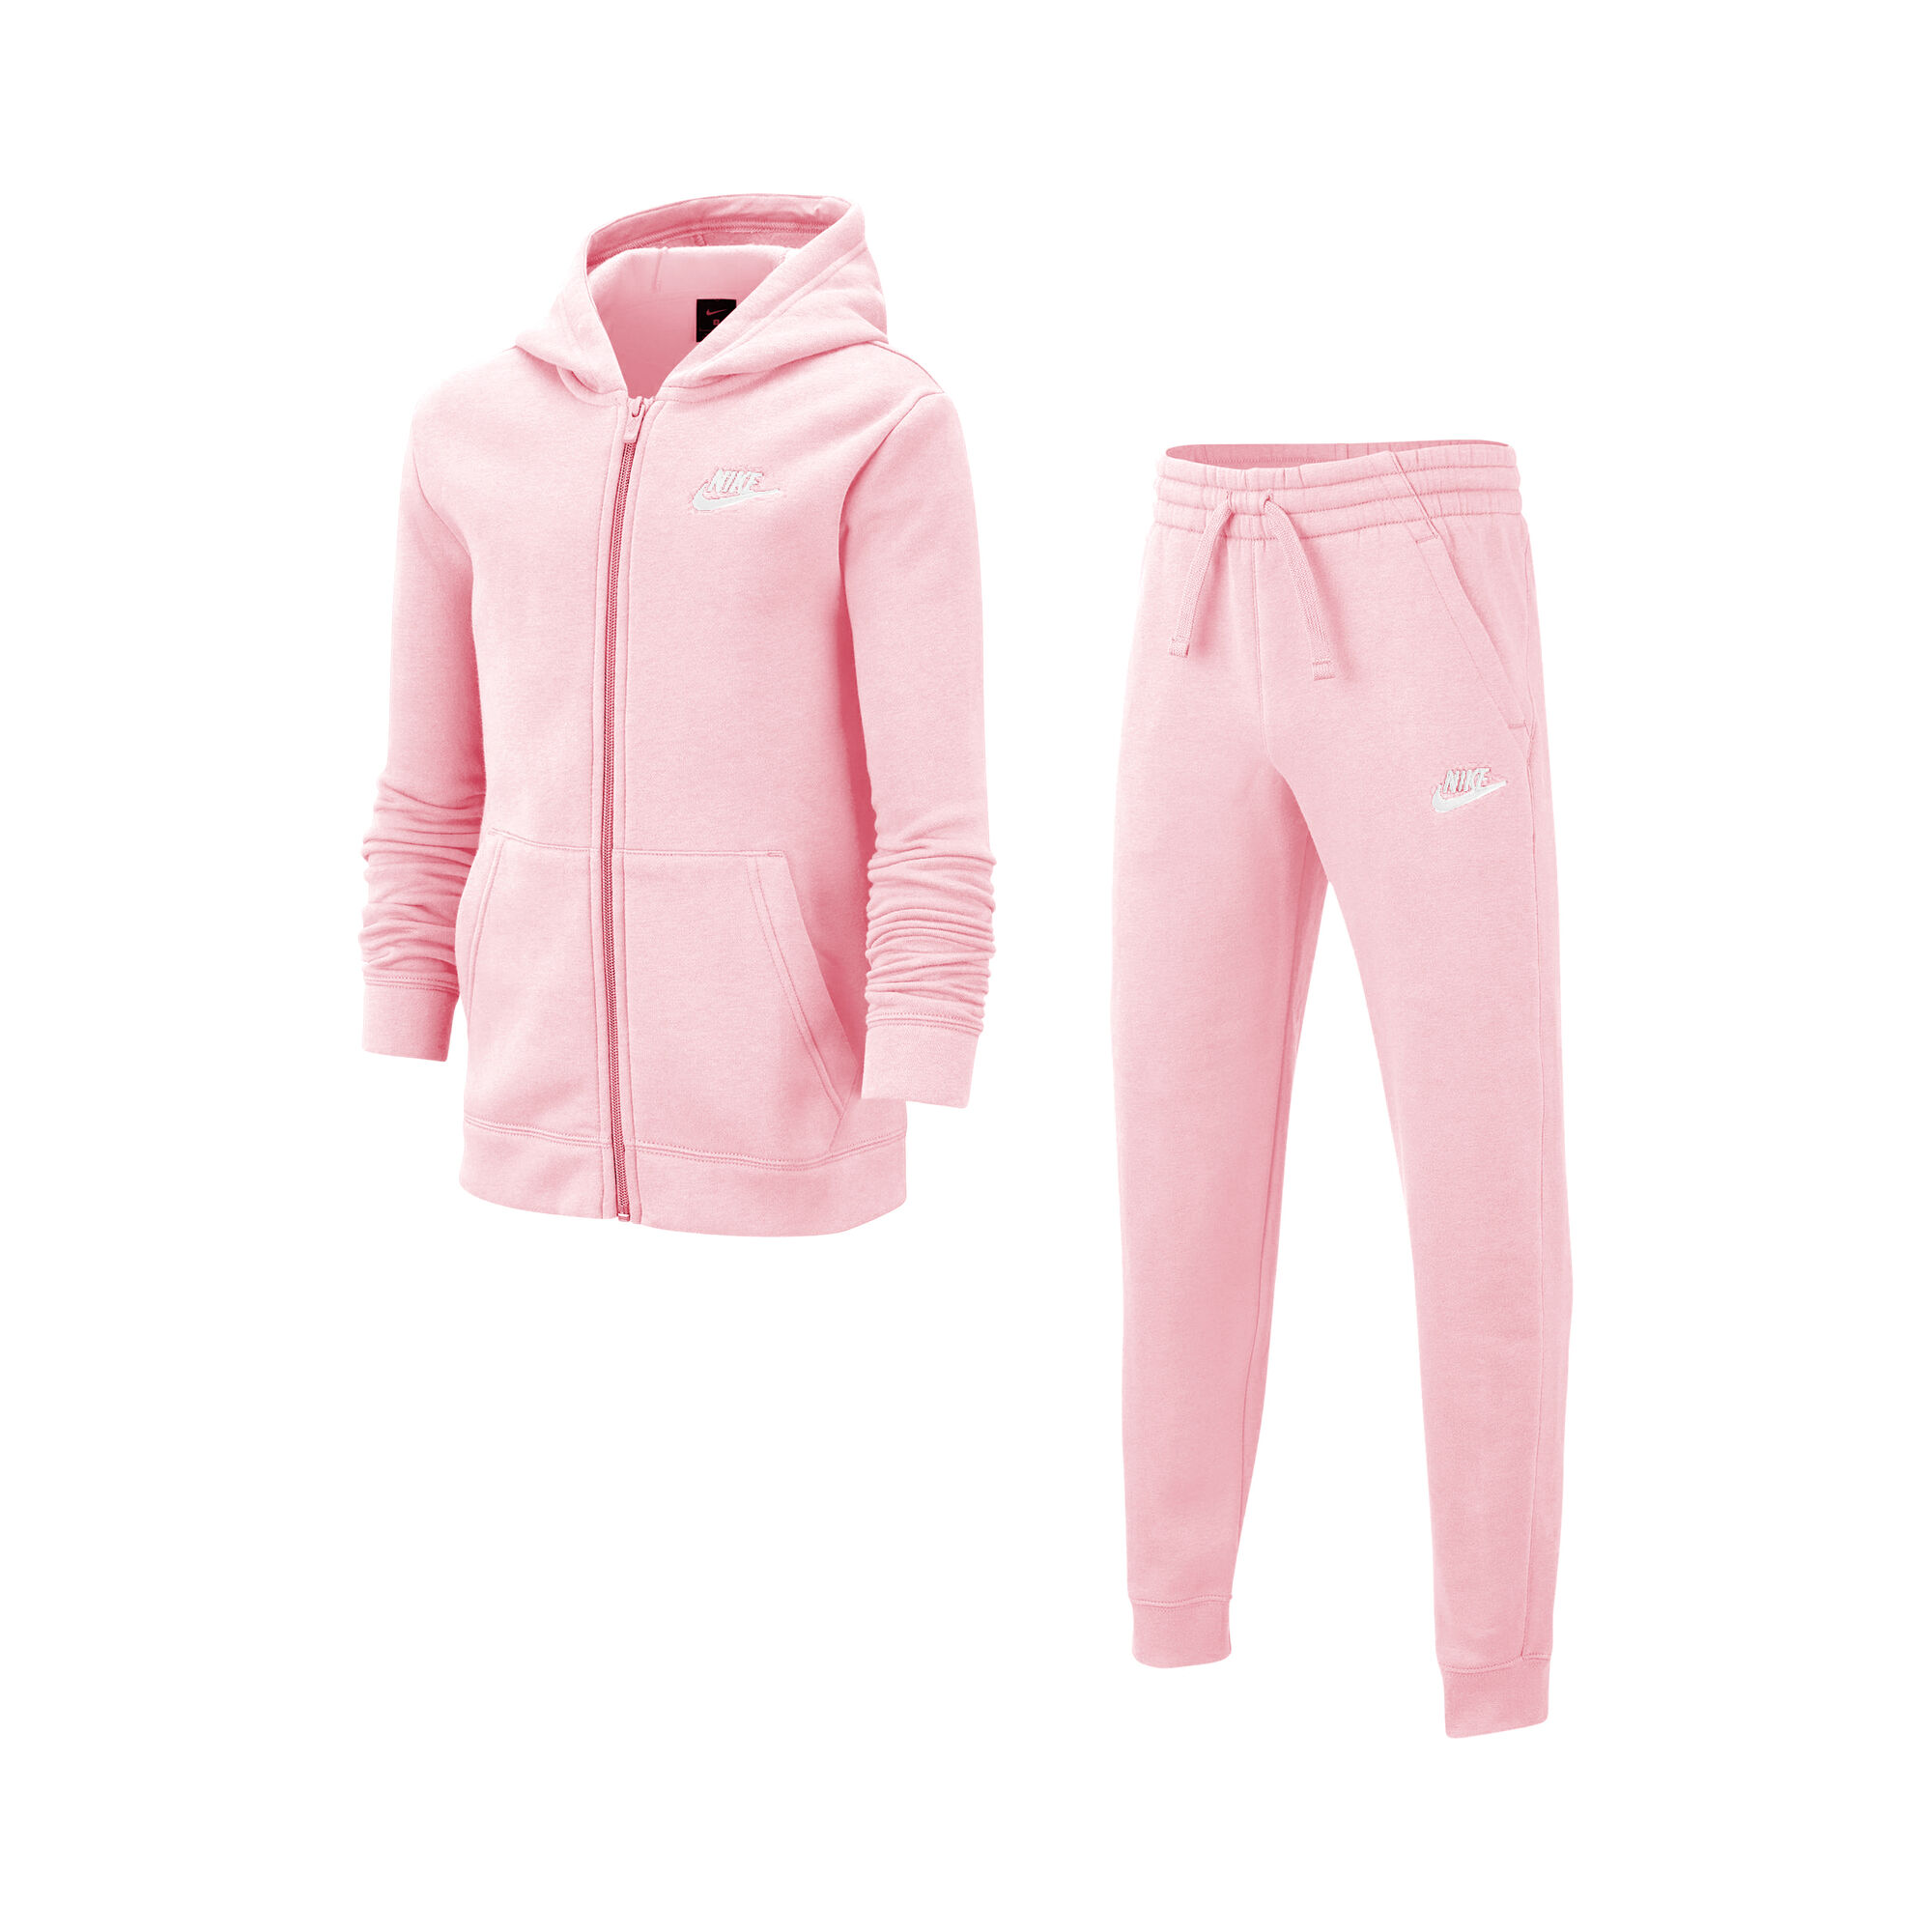 Buy Nike Sportswear Tracksuit Girls Pink online | Tennis Point UK